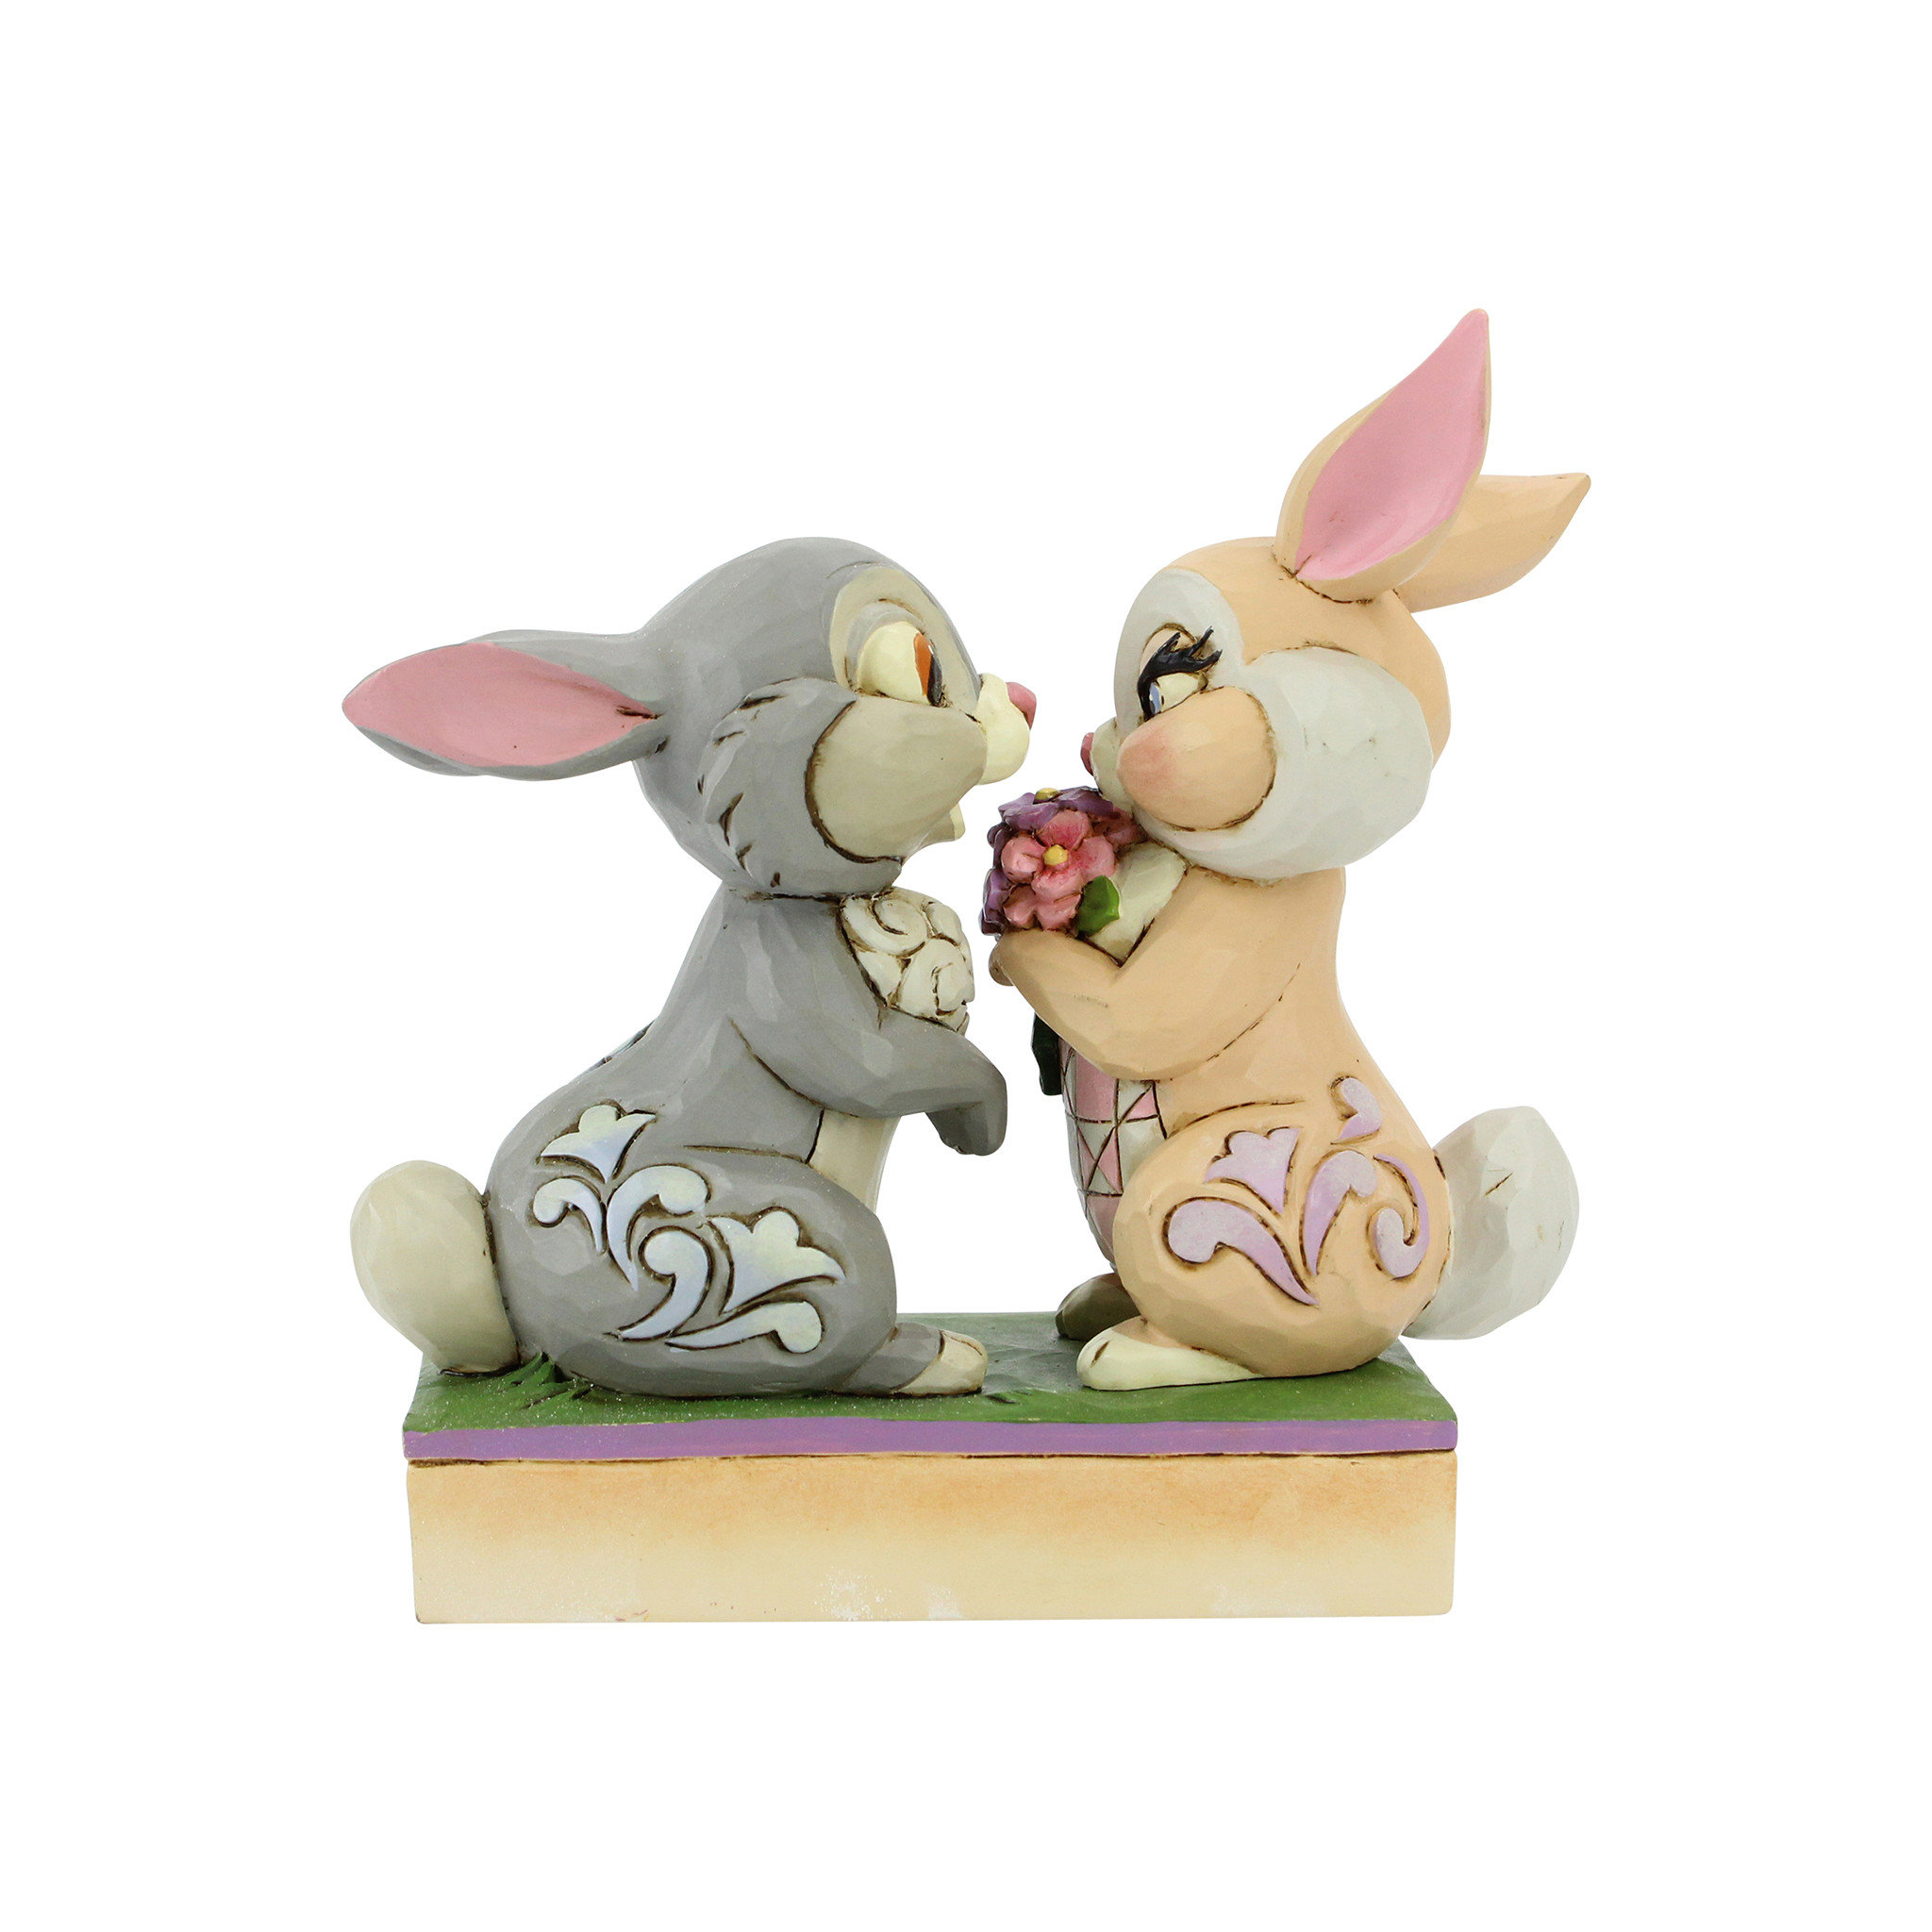 Thumper Pan Pan Mini Figurine Disney Traditions Enesco